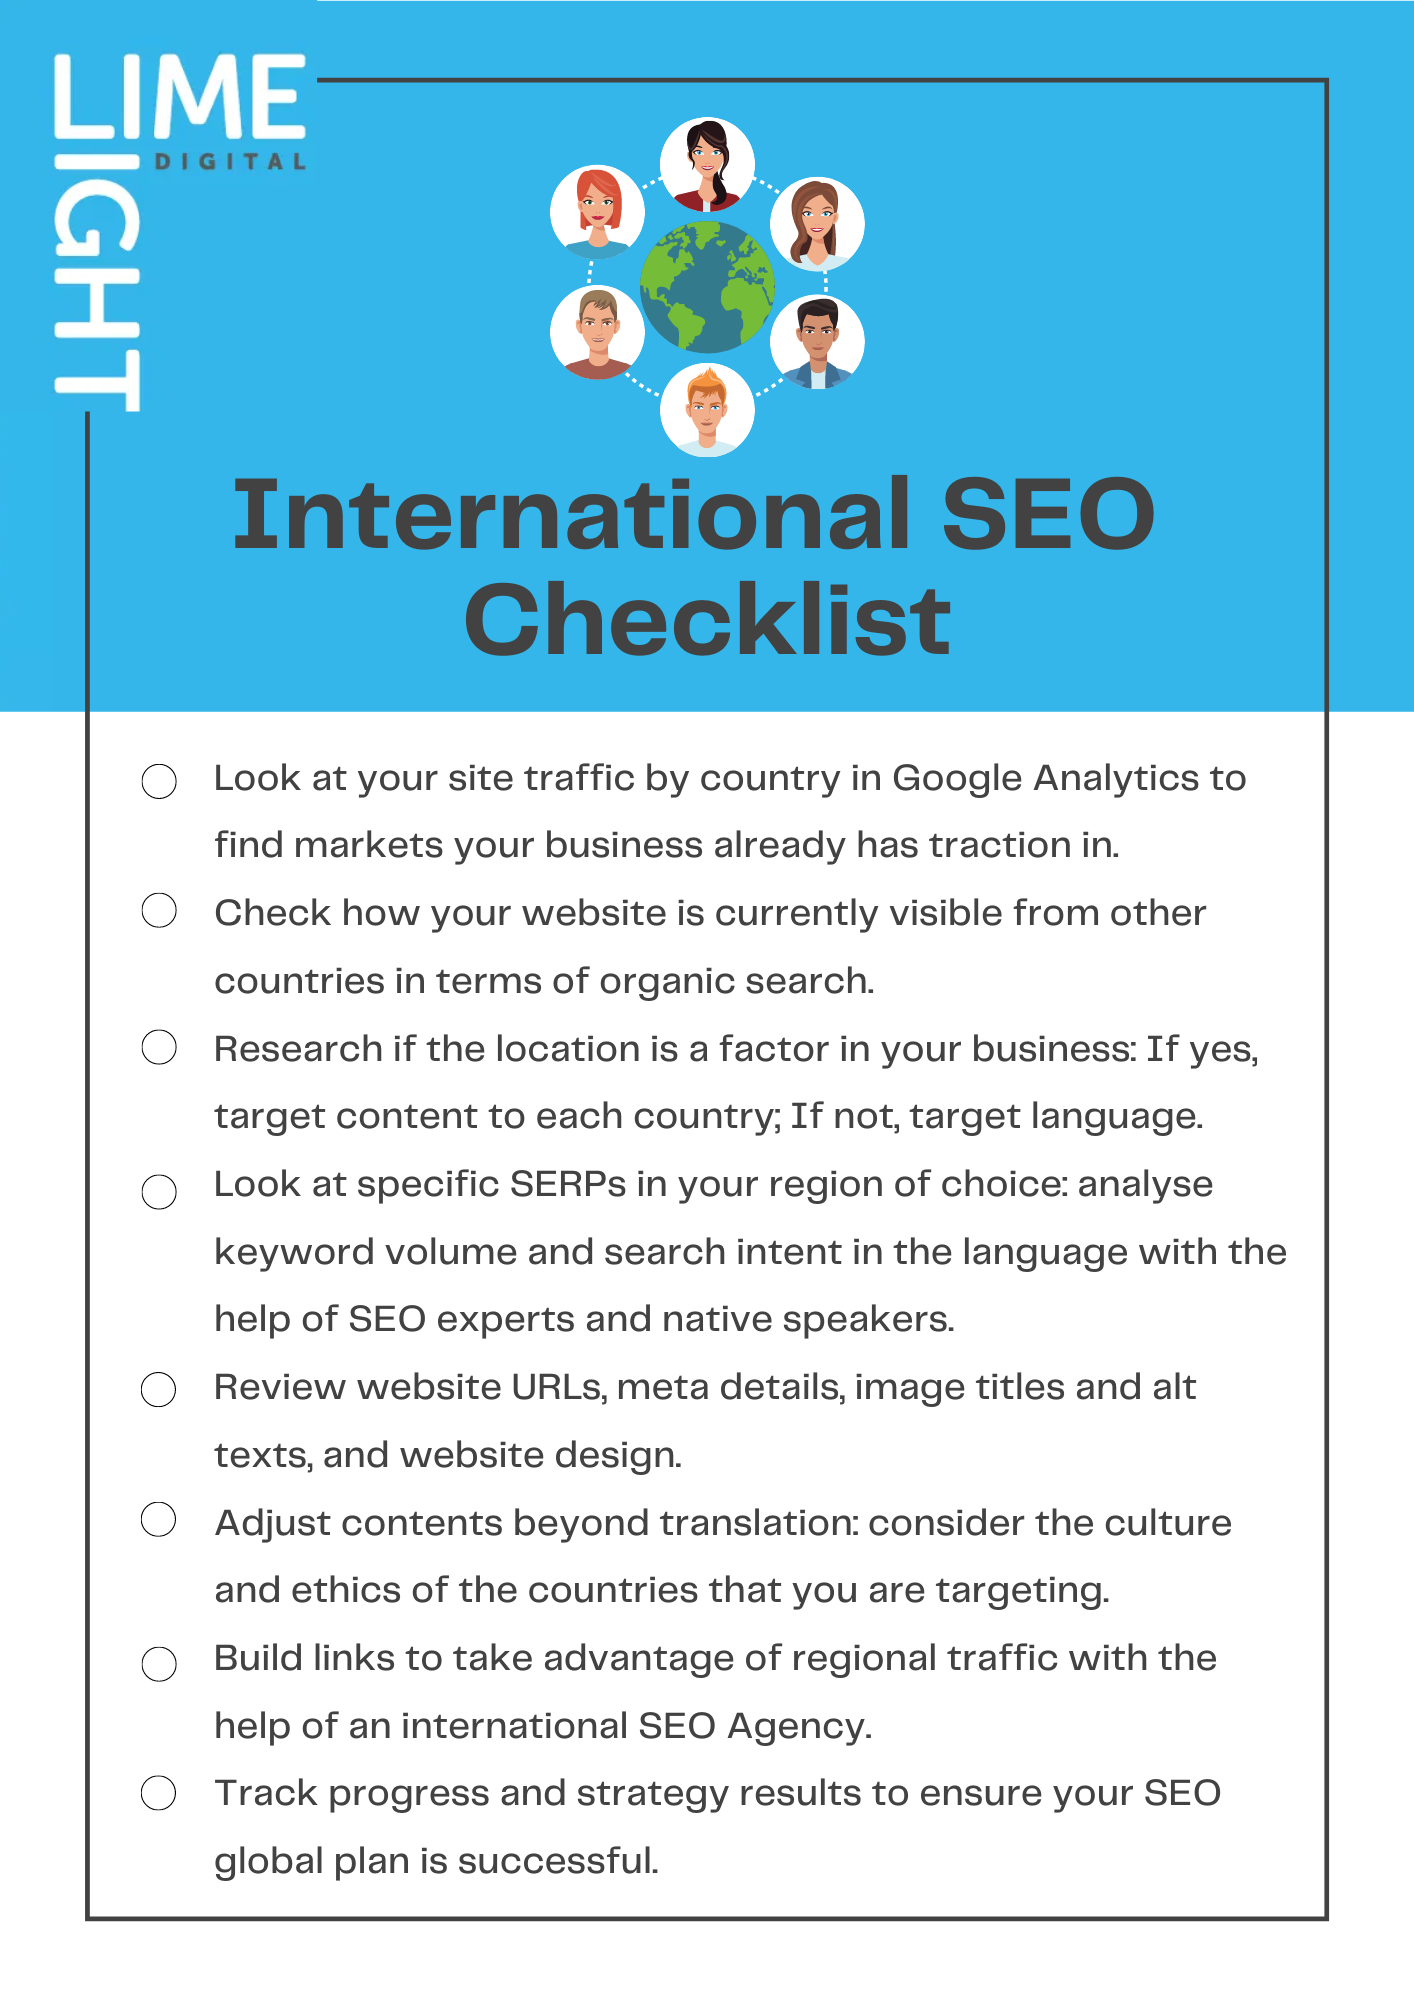 Limelight-Digital-International-SEO-Checklist